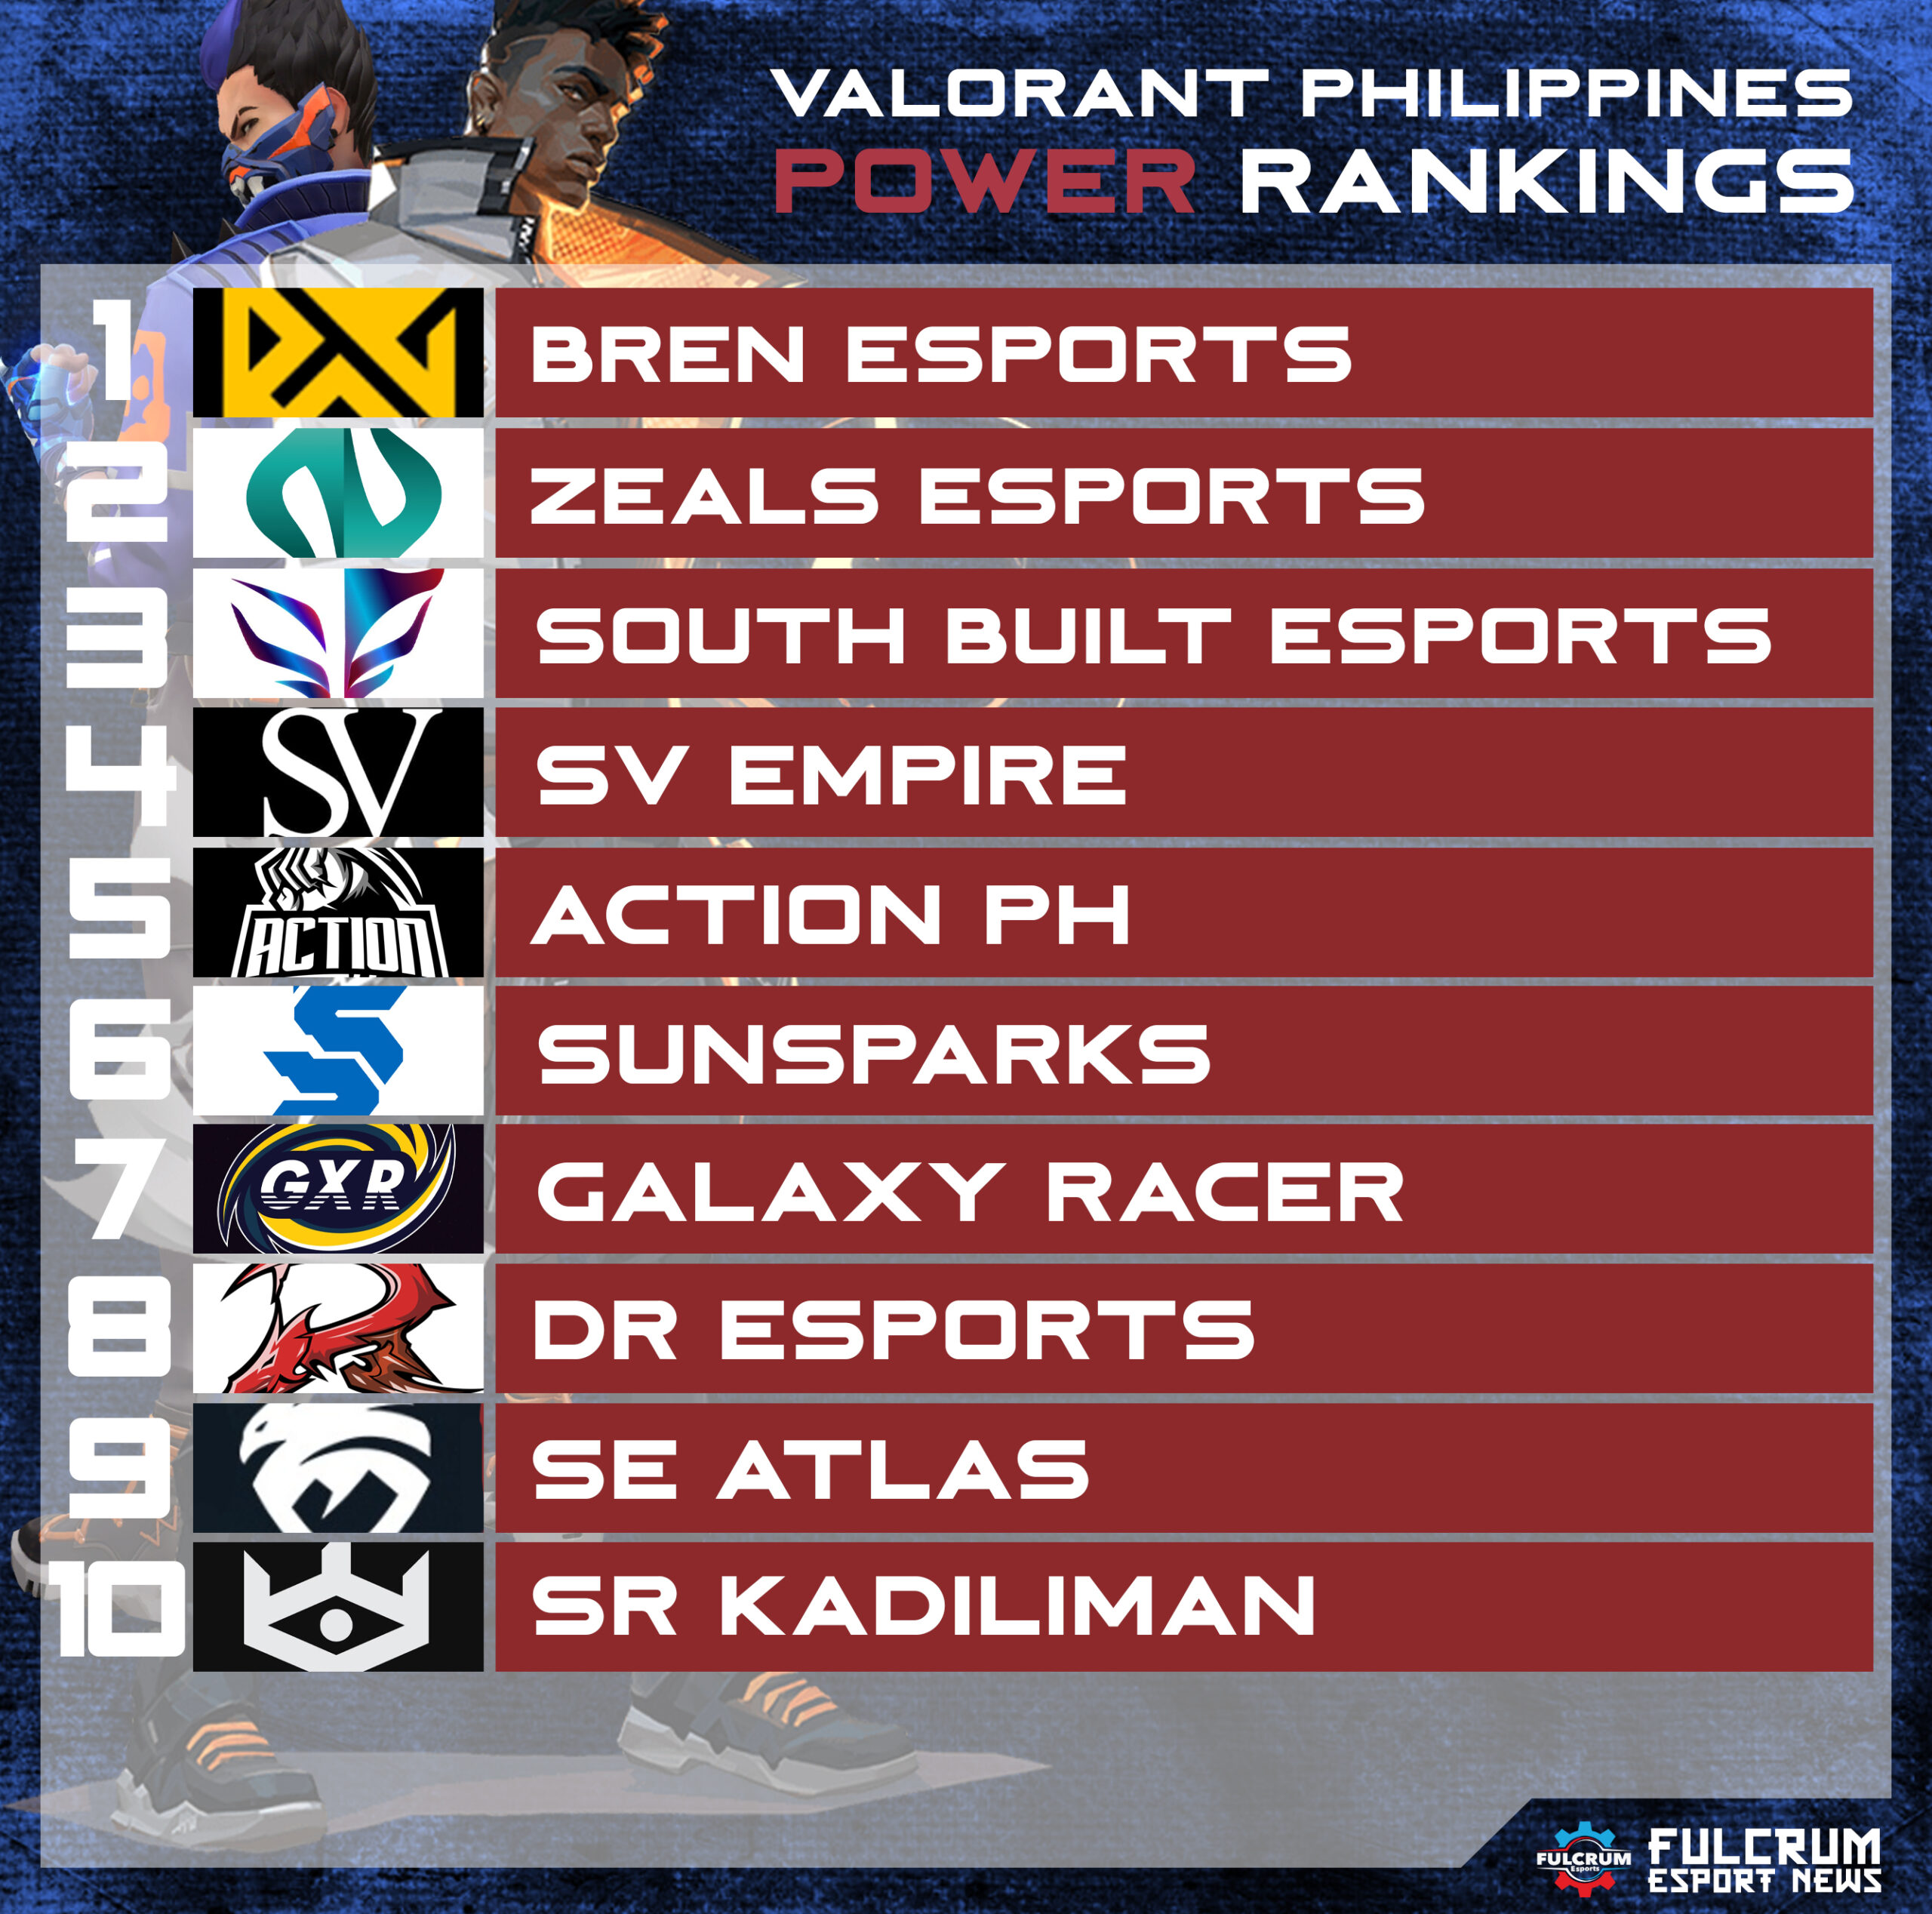 VALORANT Power rankings  The top teams in VALORANT